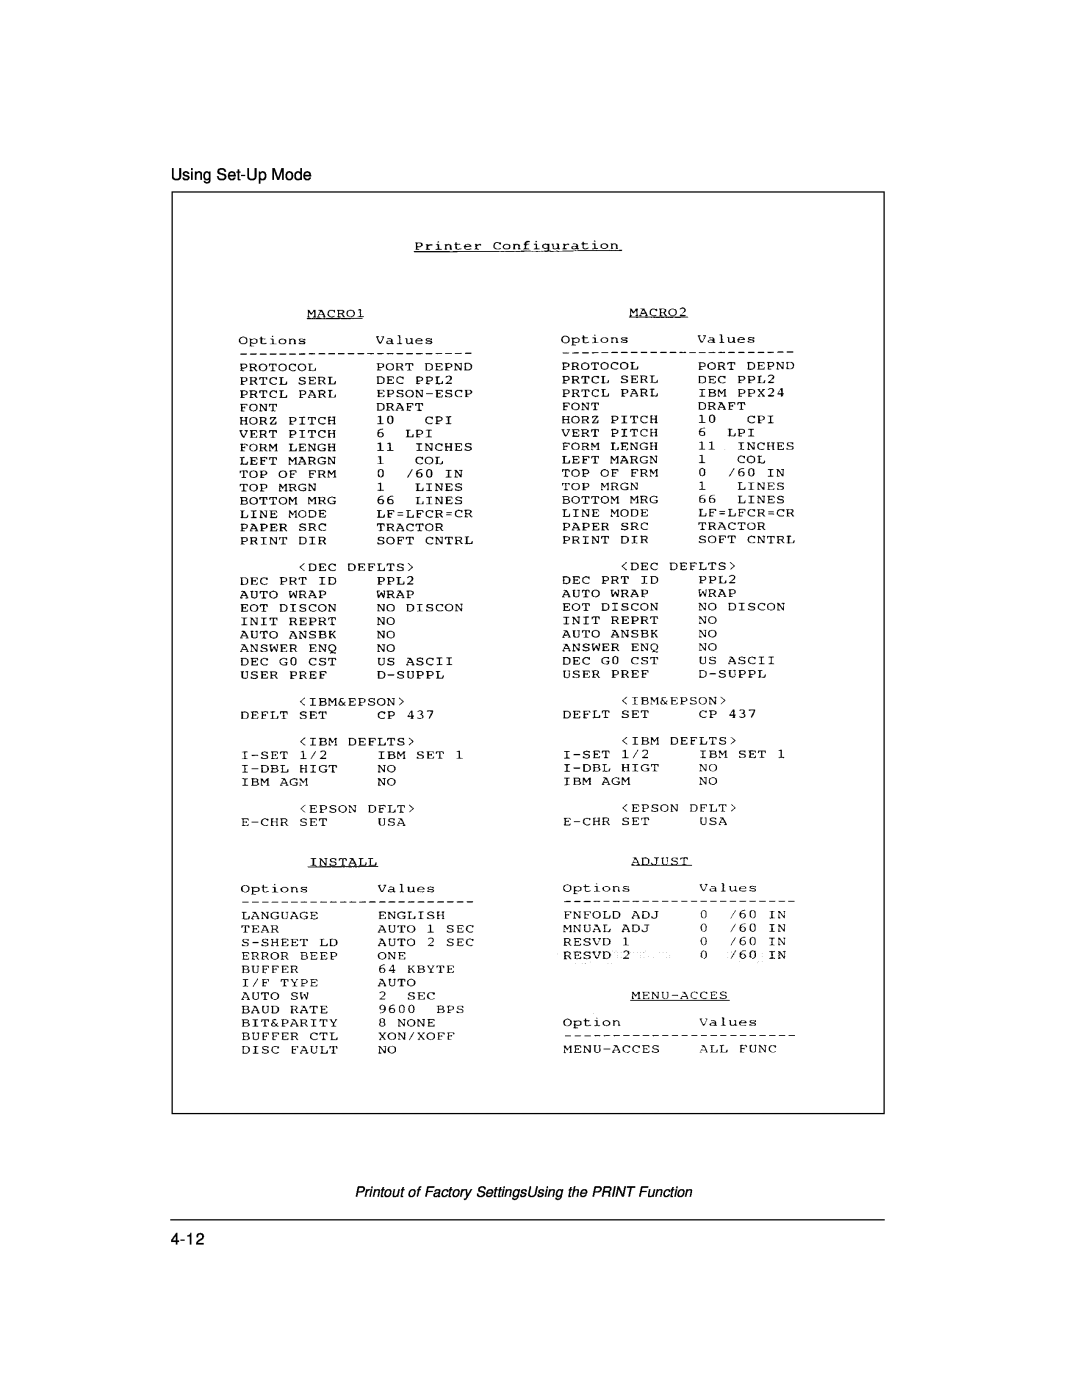 Genicom LA36 manual Using Set-Up Mode, 4-12, Printout of Factory SettingsUsing the PRINT Function 